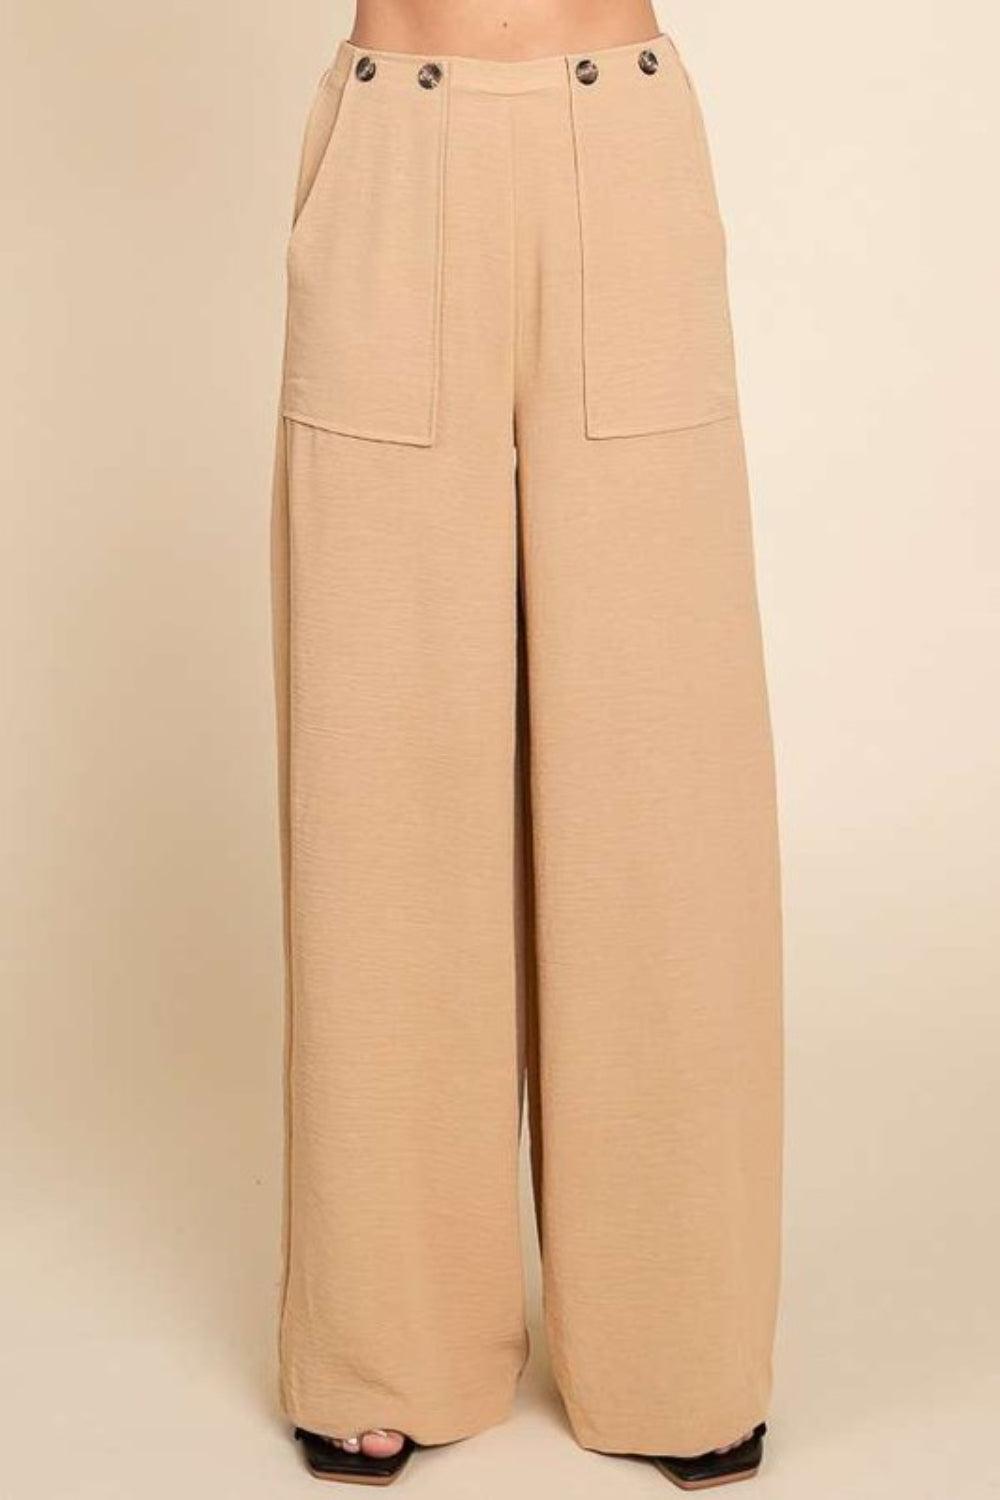 Bona Fide Fashion - Full Size High Waist Wide Leg Cargo Pants - Women Fashion - Bona Fide Fashion